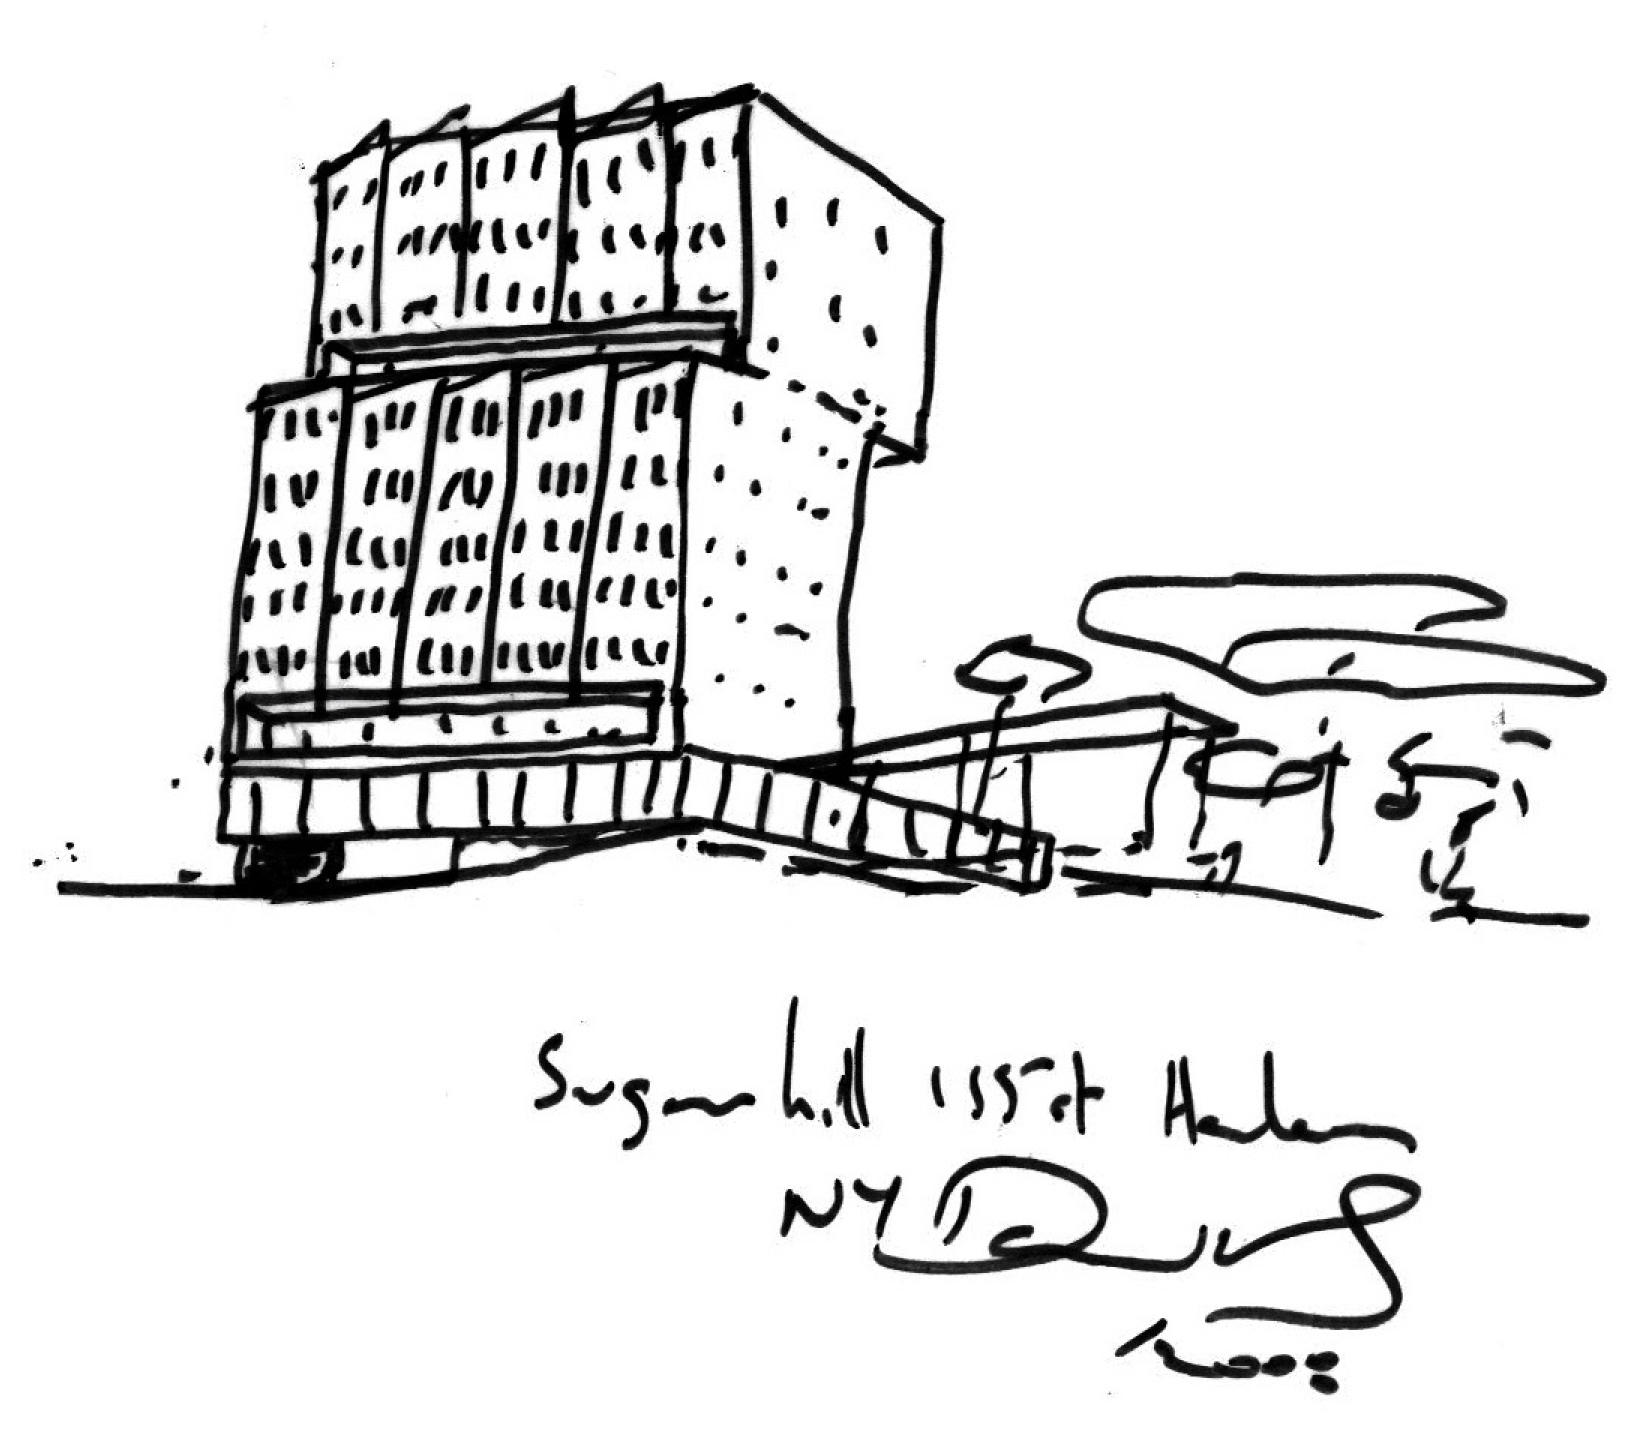 A sketch of the Sugar Hill Housing Development by Adjaye Associates in Harlem, New York